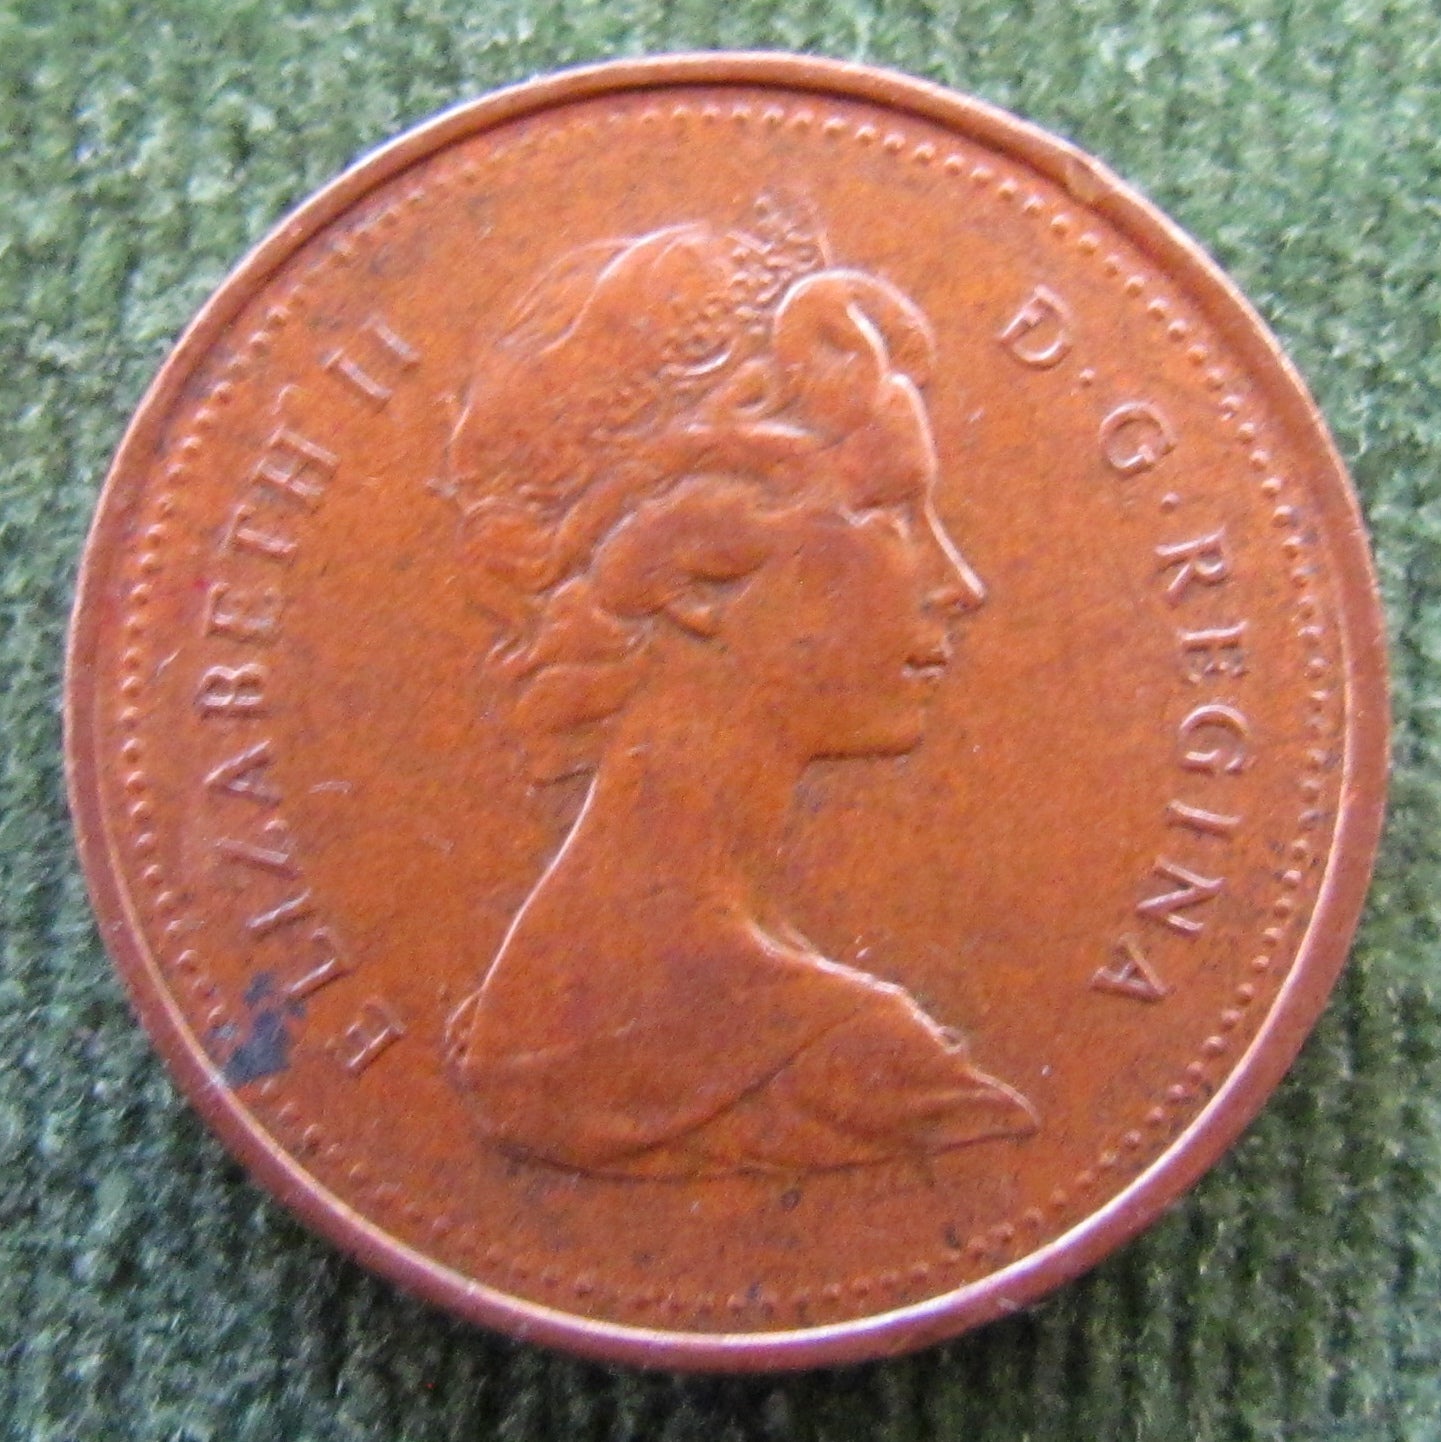 Canada 1979 1 Cent Queen Elizabeth II Coin - Circulated